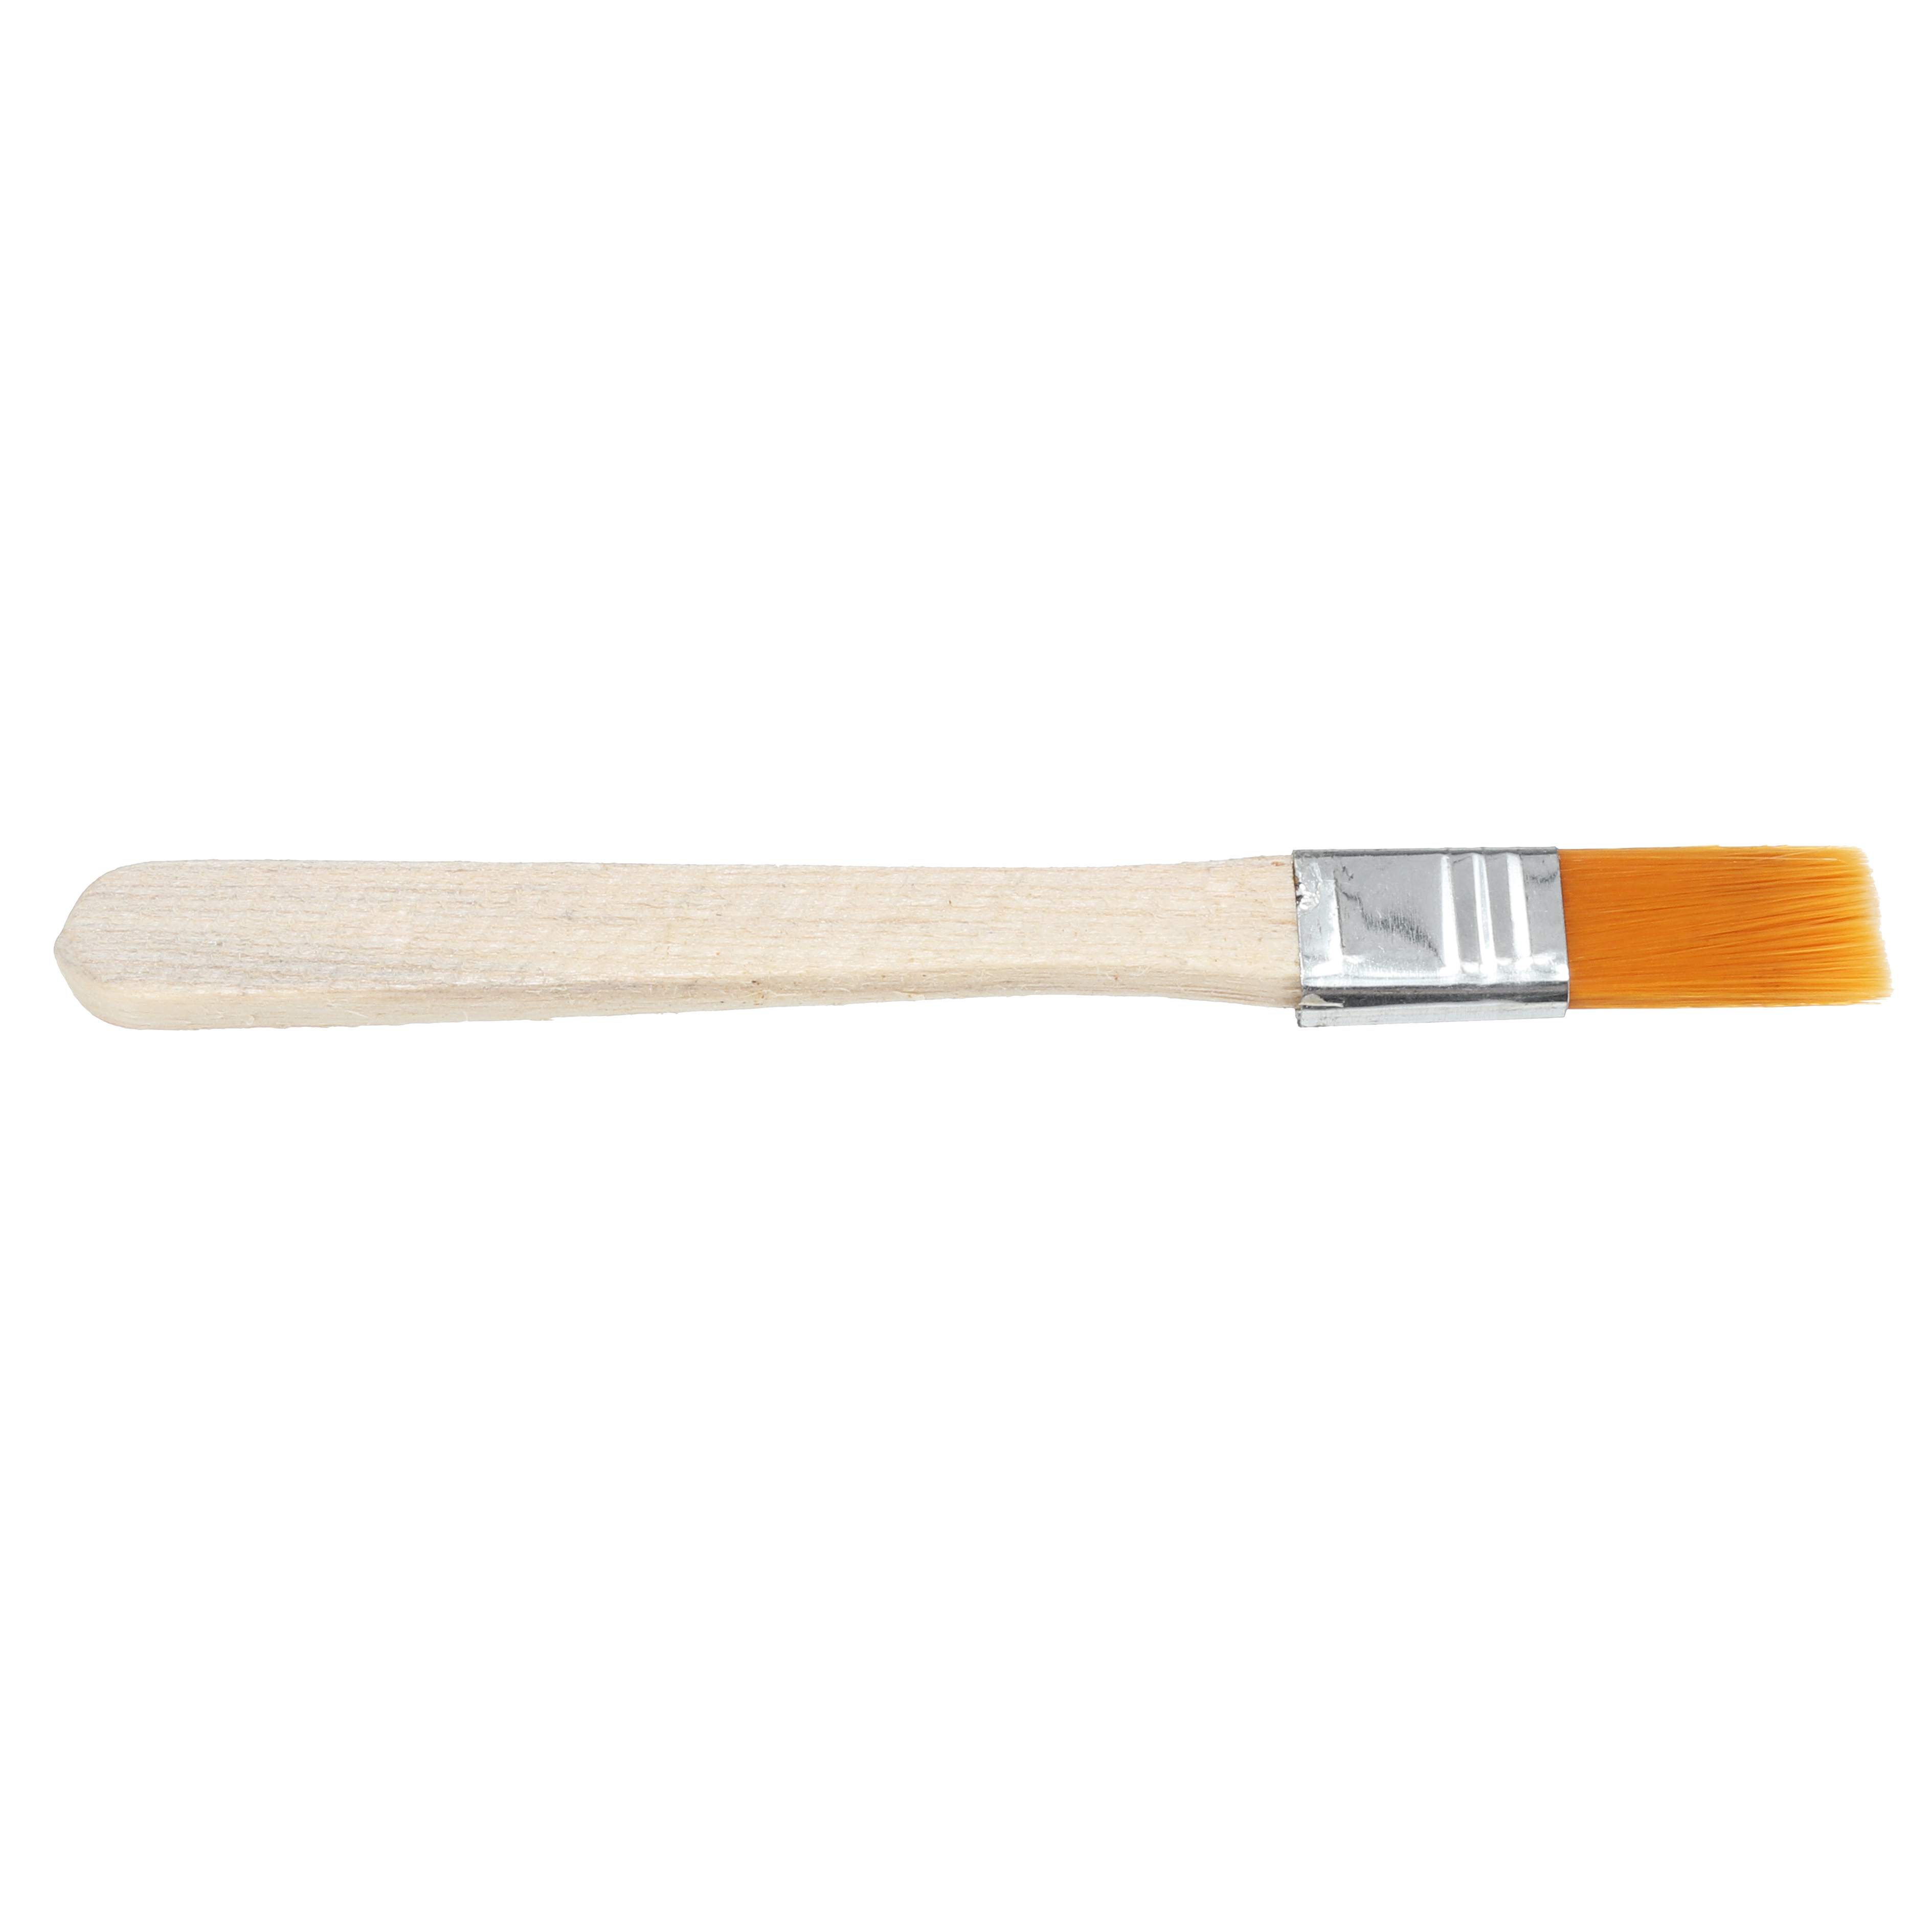 Nylon-Cleaning-Brush-DIY-Handmade-Sand-Table-Construction-Model-tool-Brushes-1491171-4